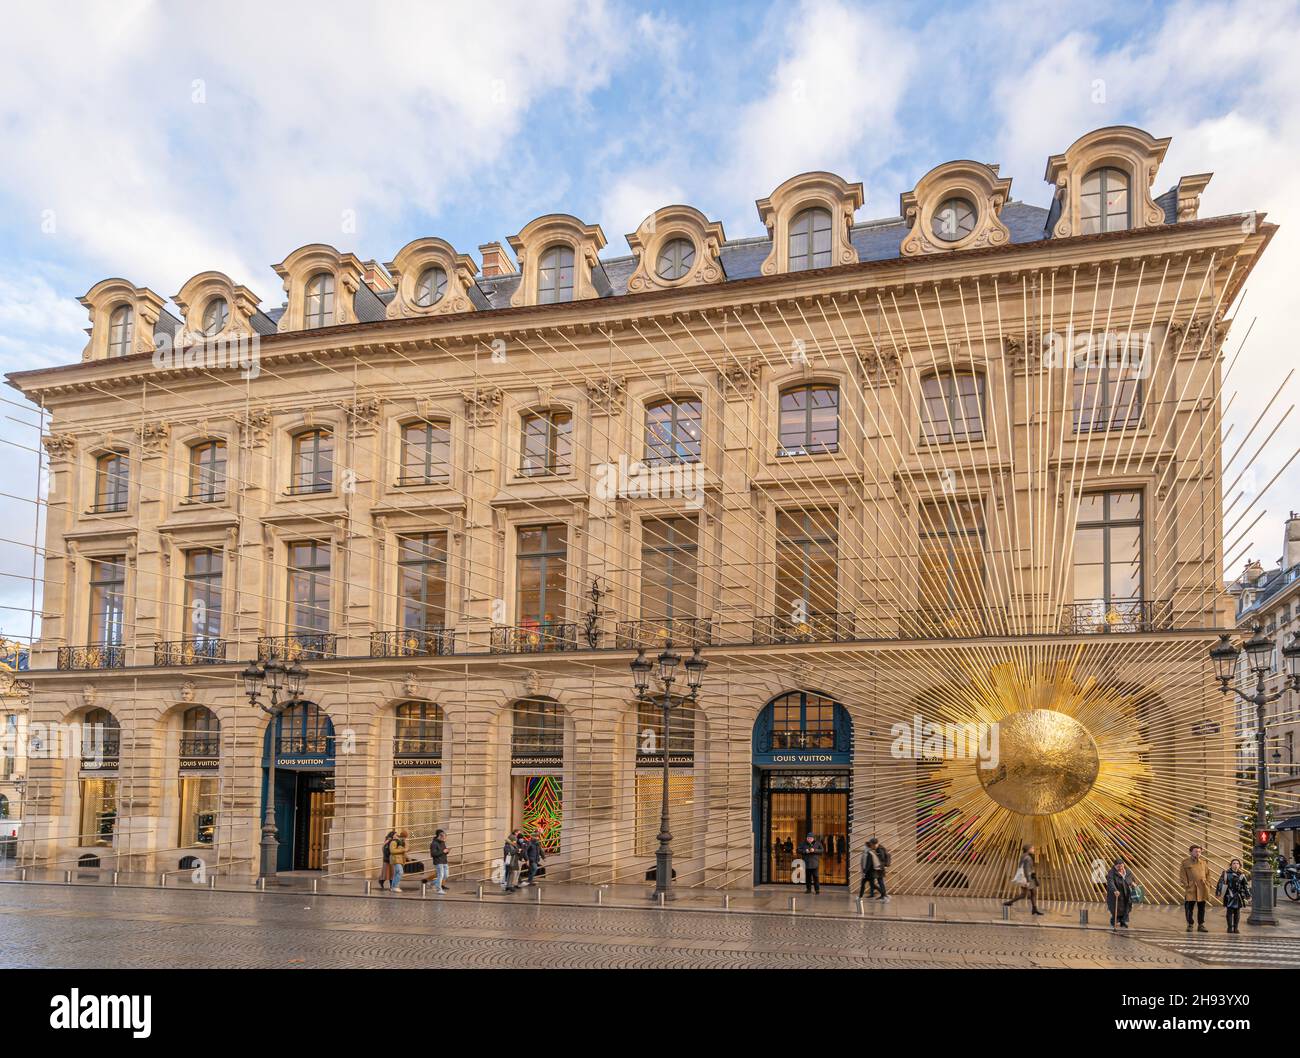 Paris, France - 12 01 2021: Place vendome. View of the facade of Louis ...